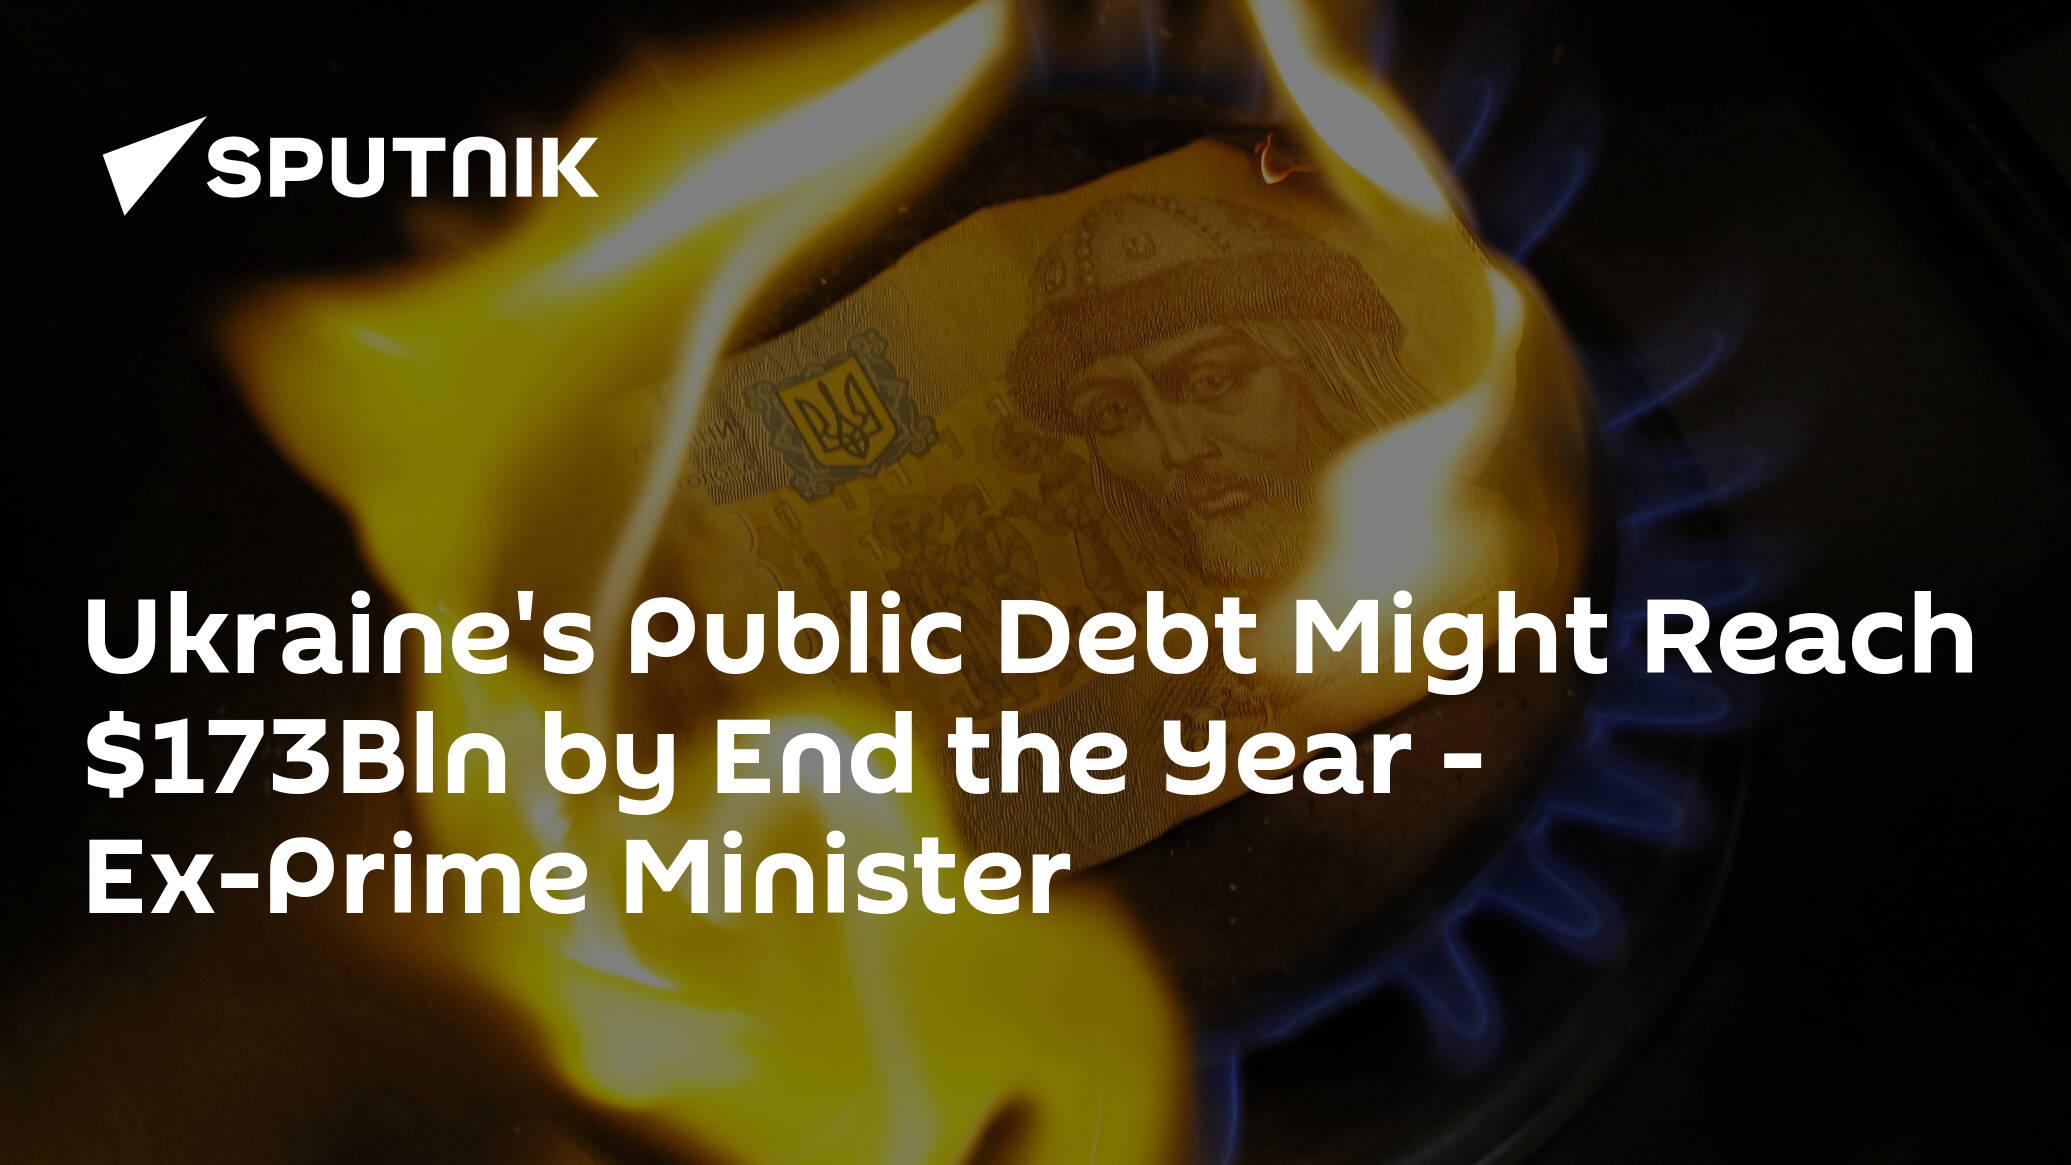 Ukraine's Public Debt Might Reach 3Bln by End of 2023 – Ex-Prime Minister